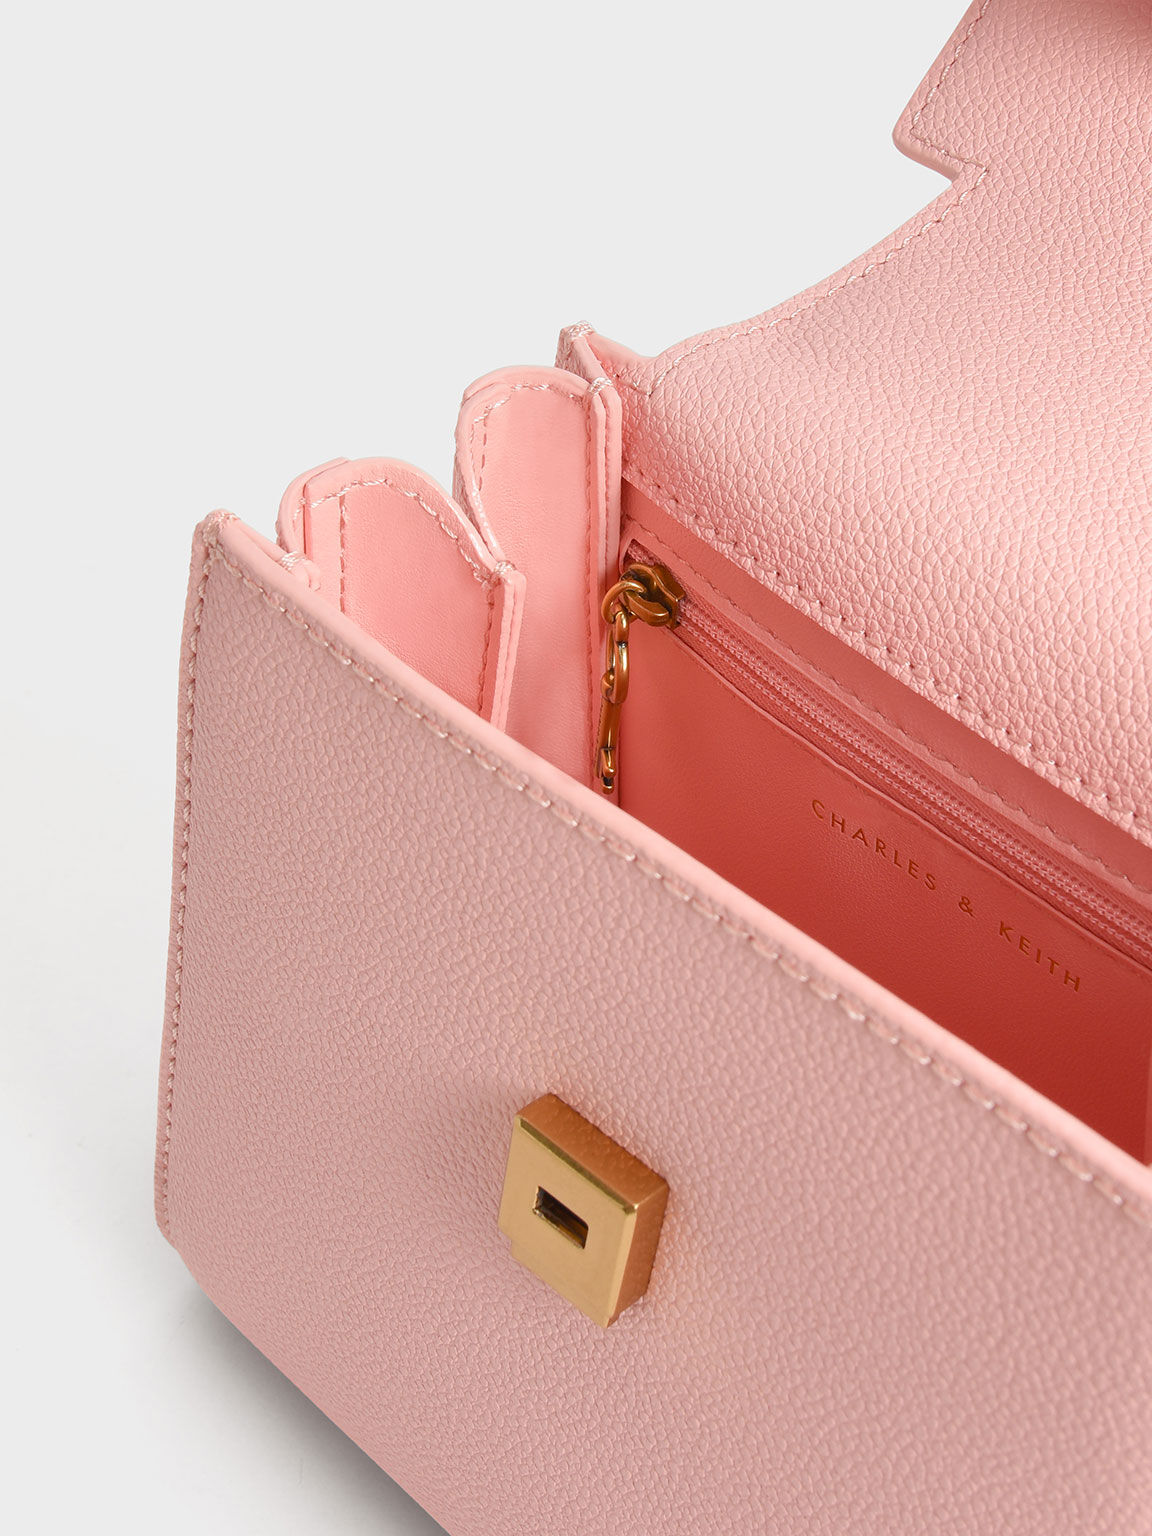 Geometric Top Handle Chain-Link Bag, Light Pink, hi-res